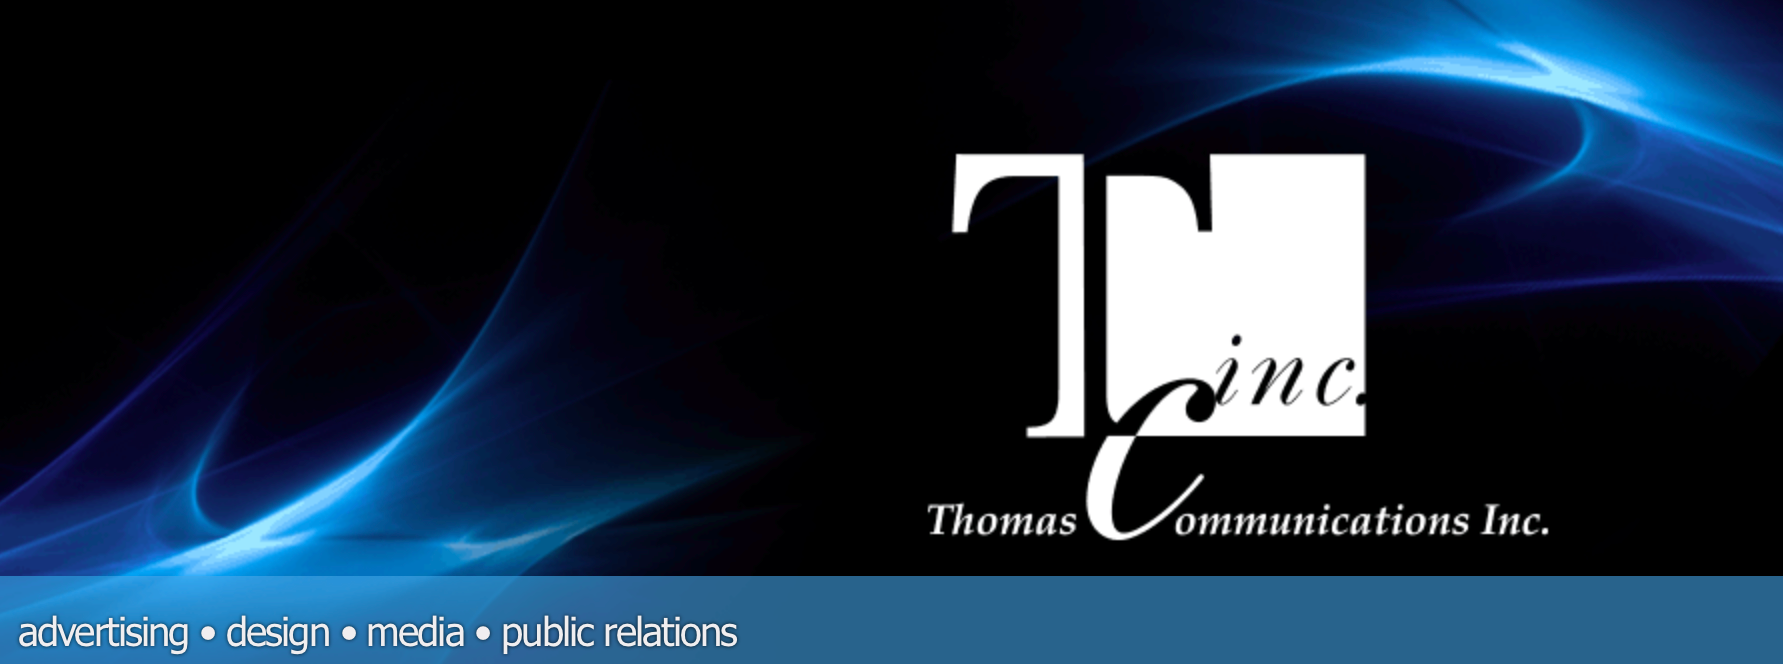 Thomas Communications, Inc.